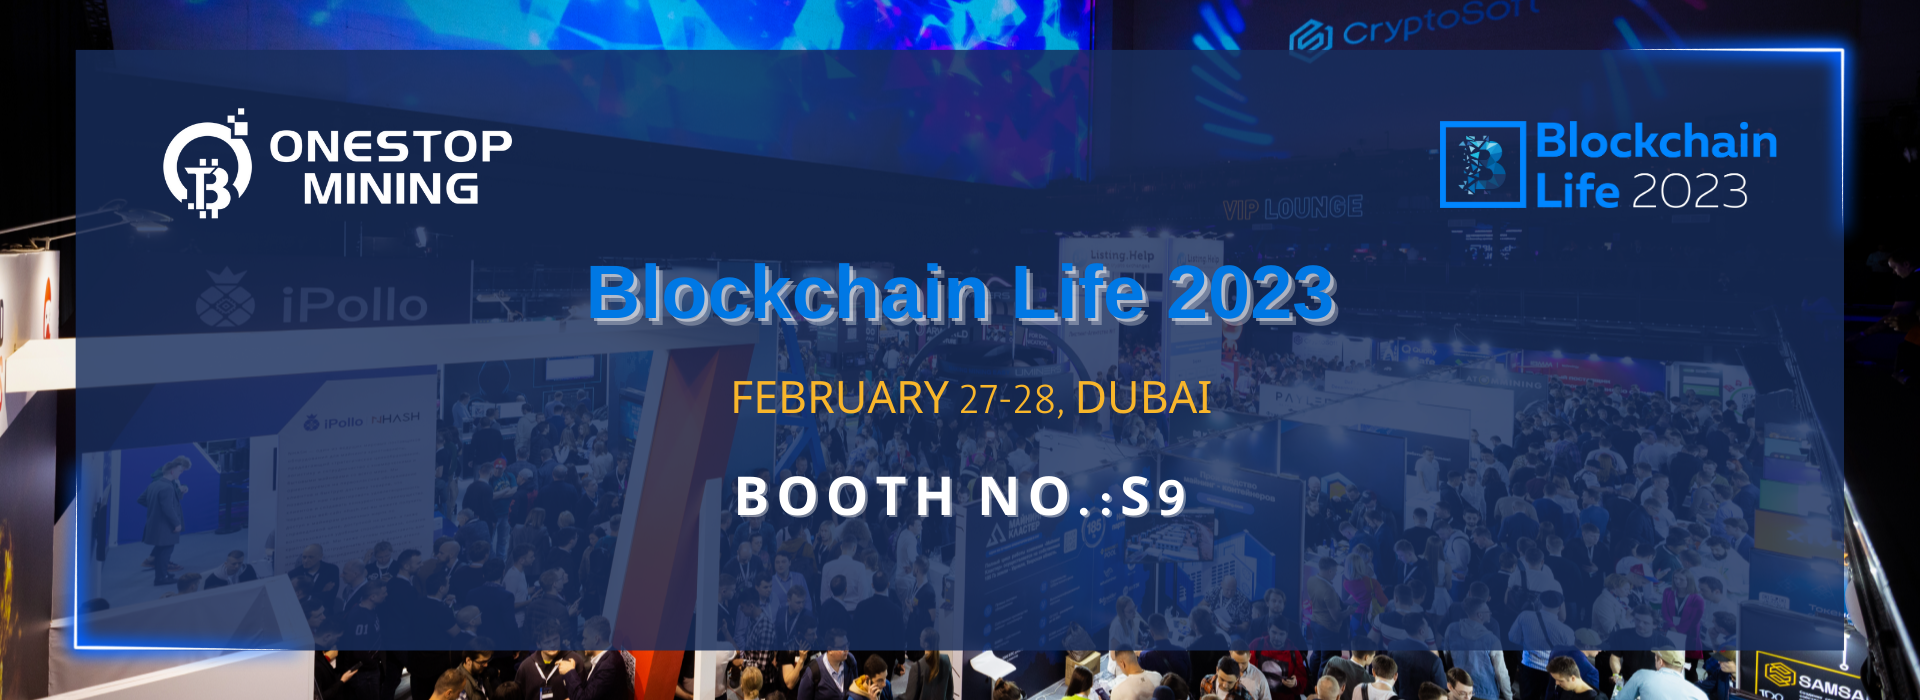 OnestopMining will attend Blockchain Life 2023 in Dubai